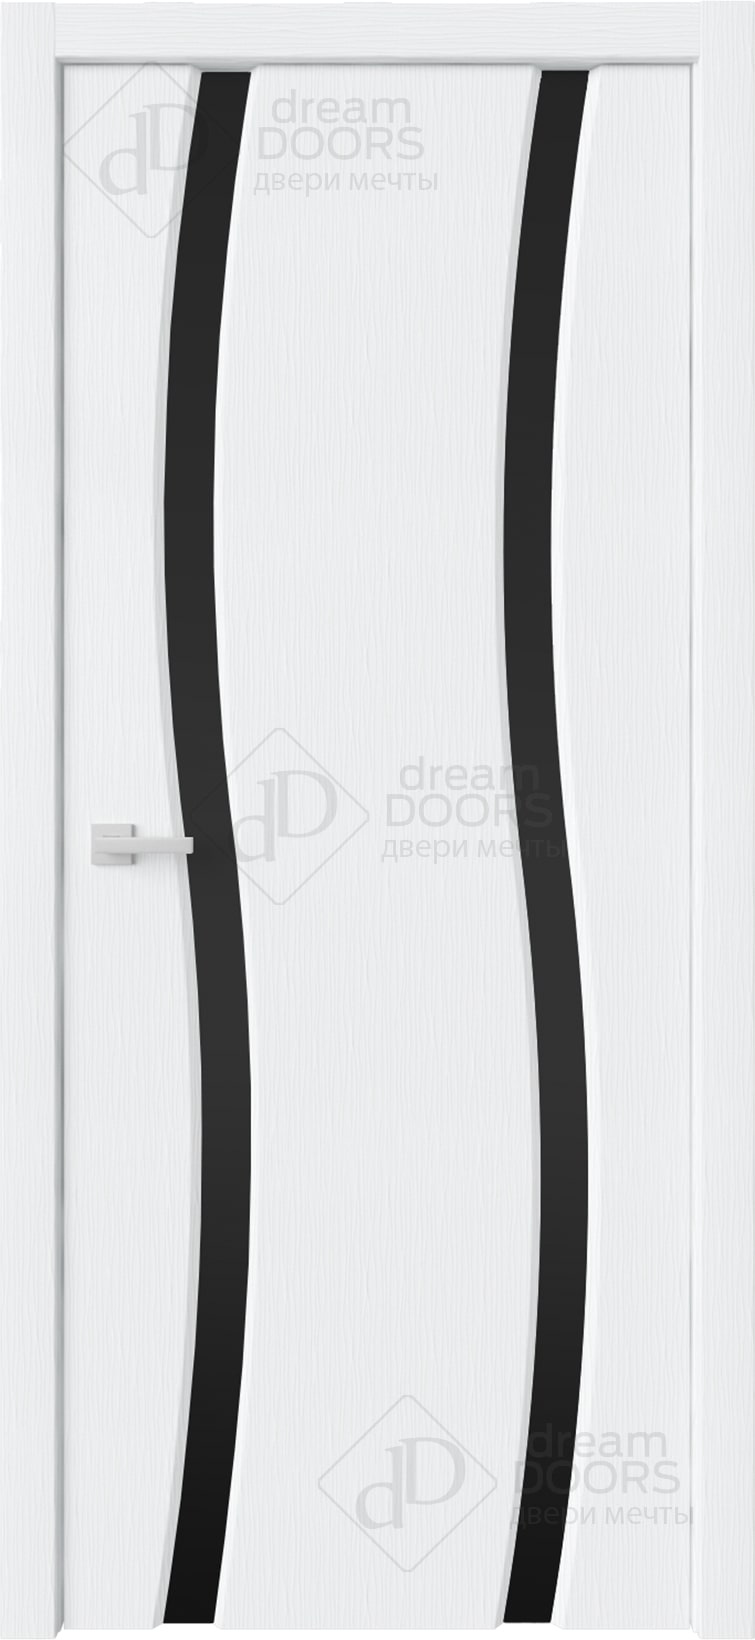 Dream Doors Межкомнатная дверь Сириус 2 Волна узкое ДО, арт. 20084 - фото №3